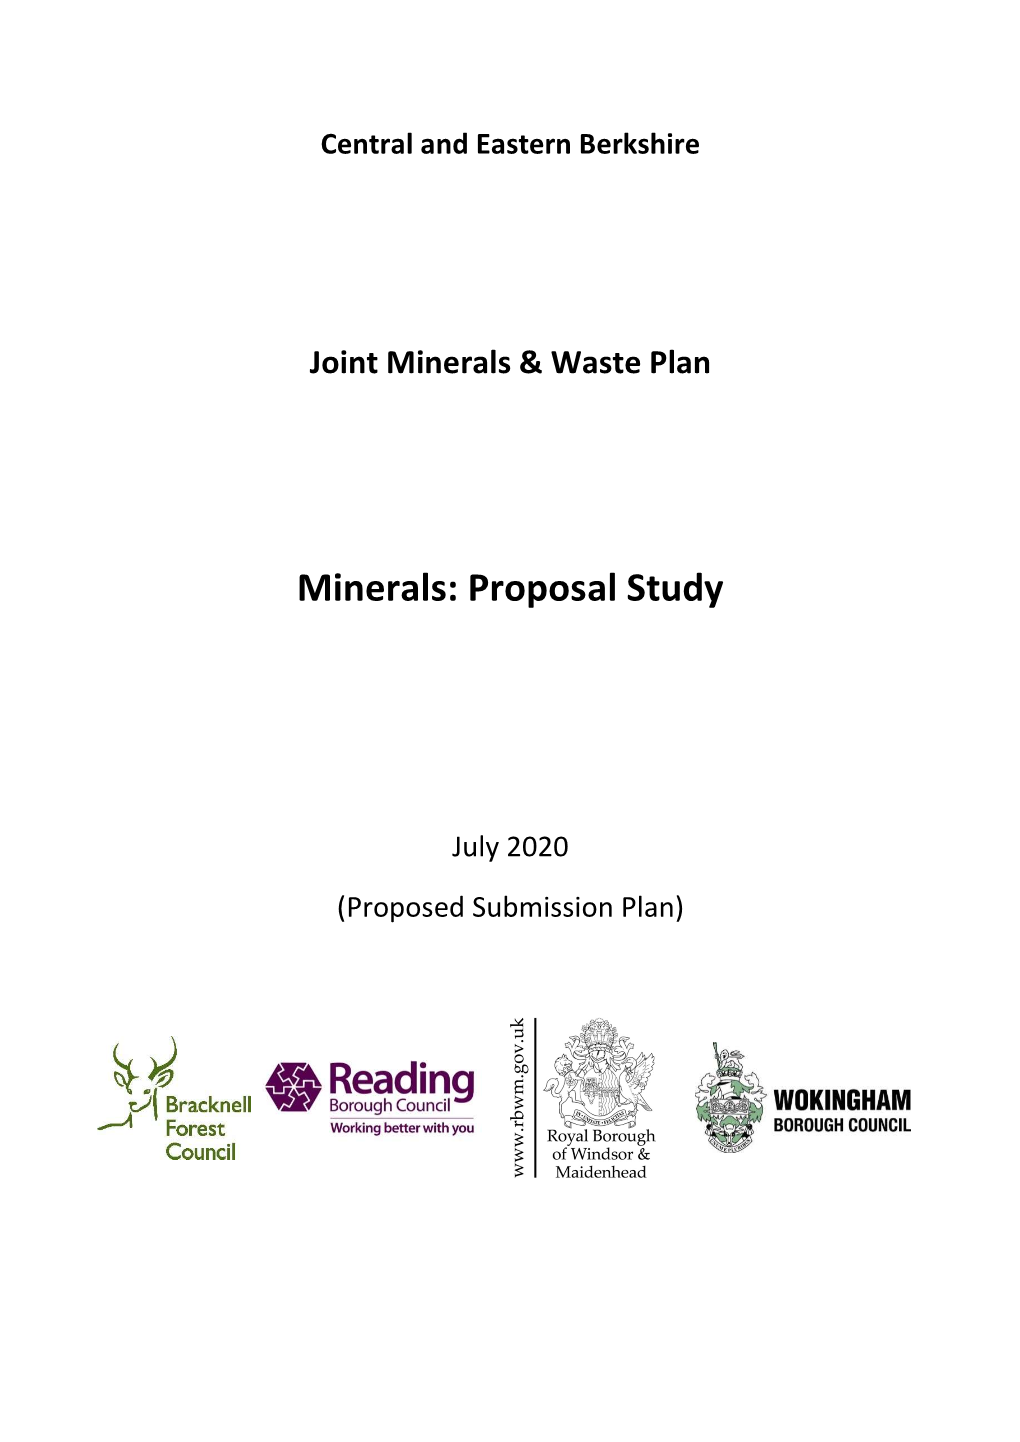 Minerals: Proposal Study